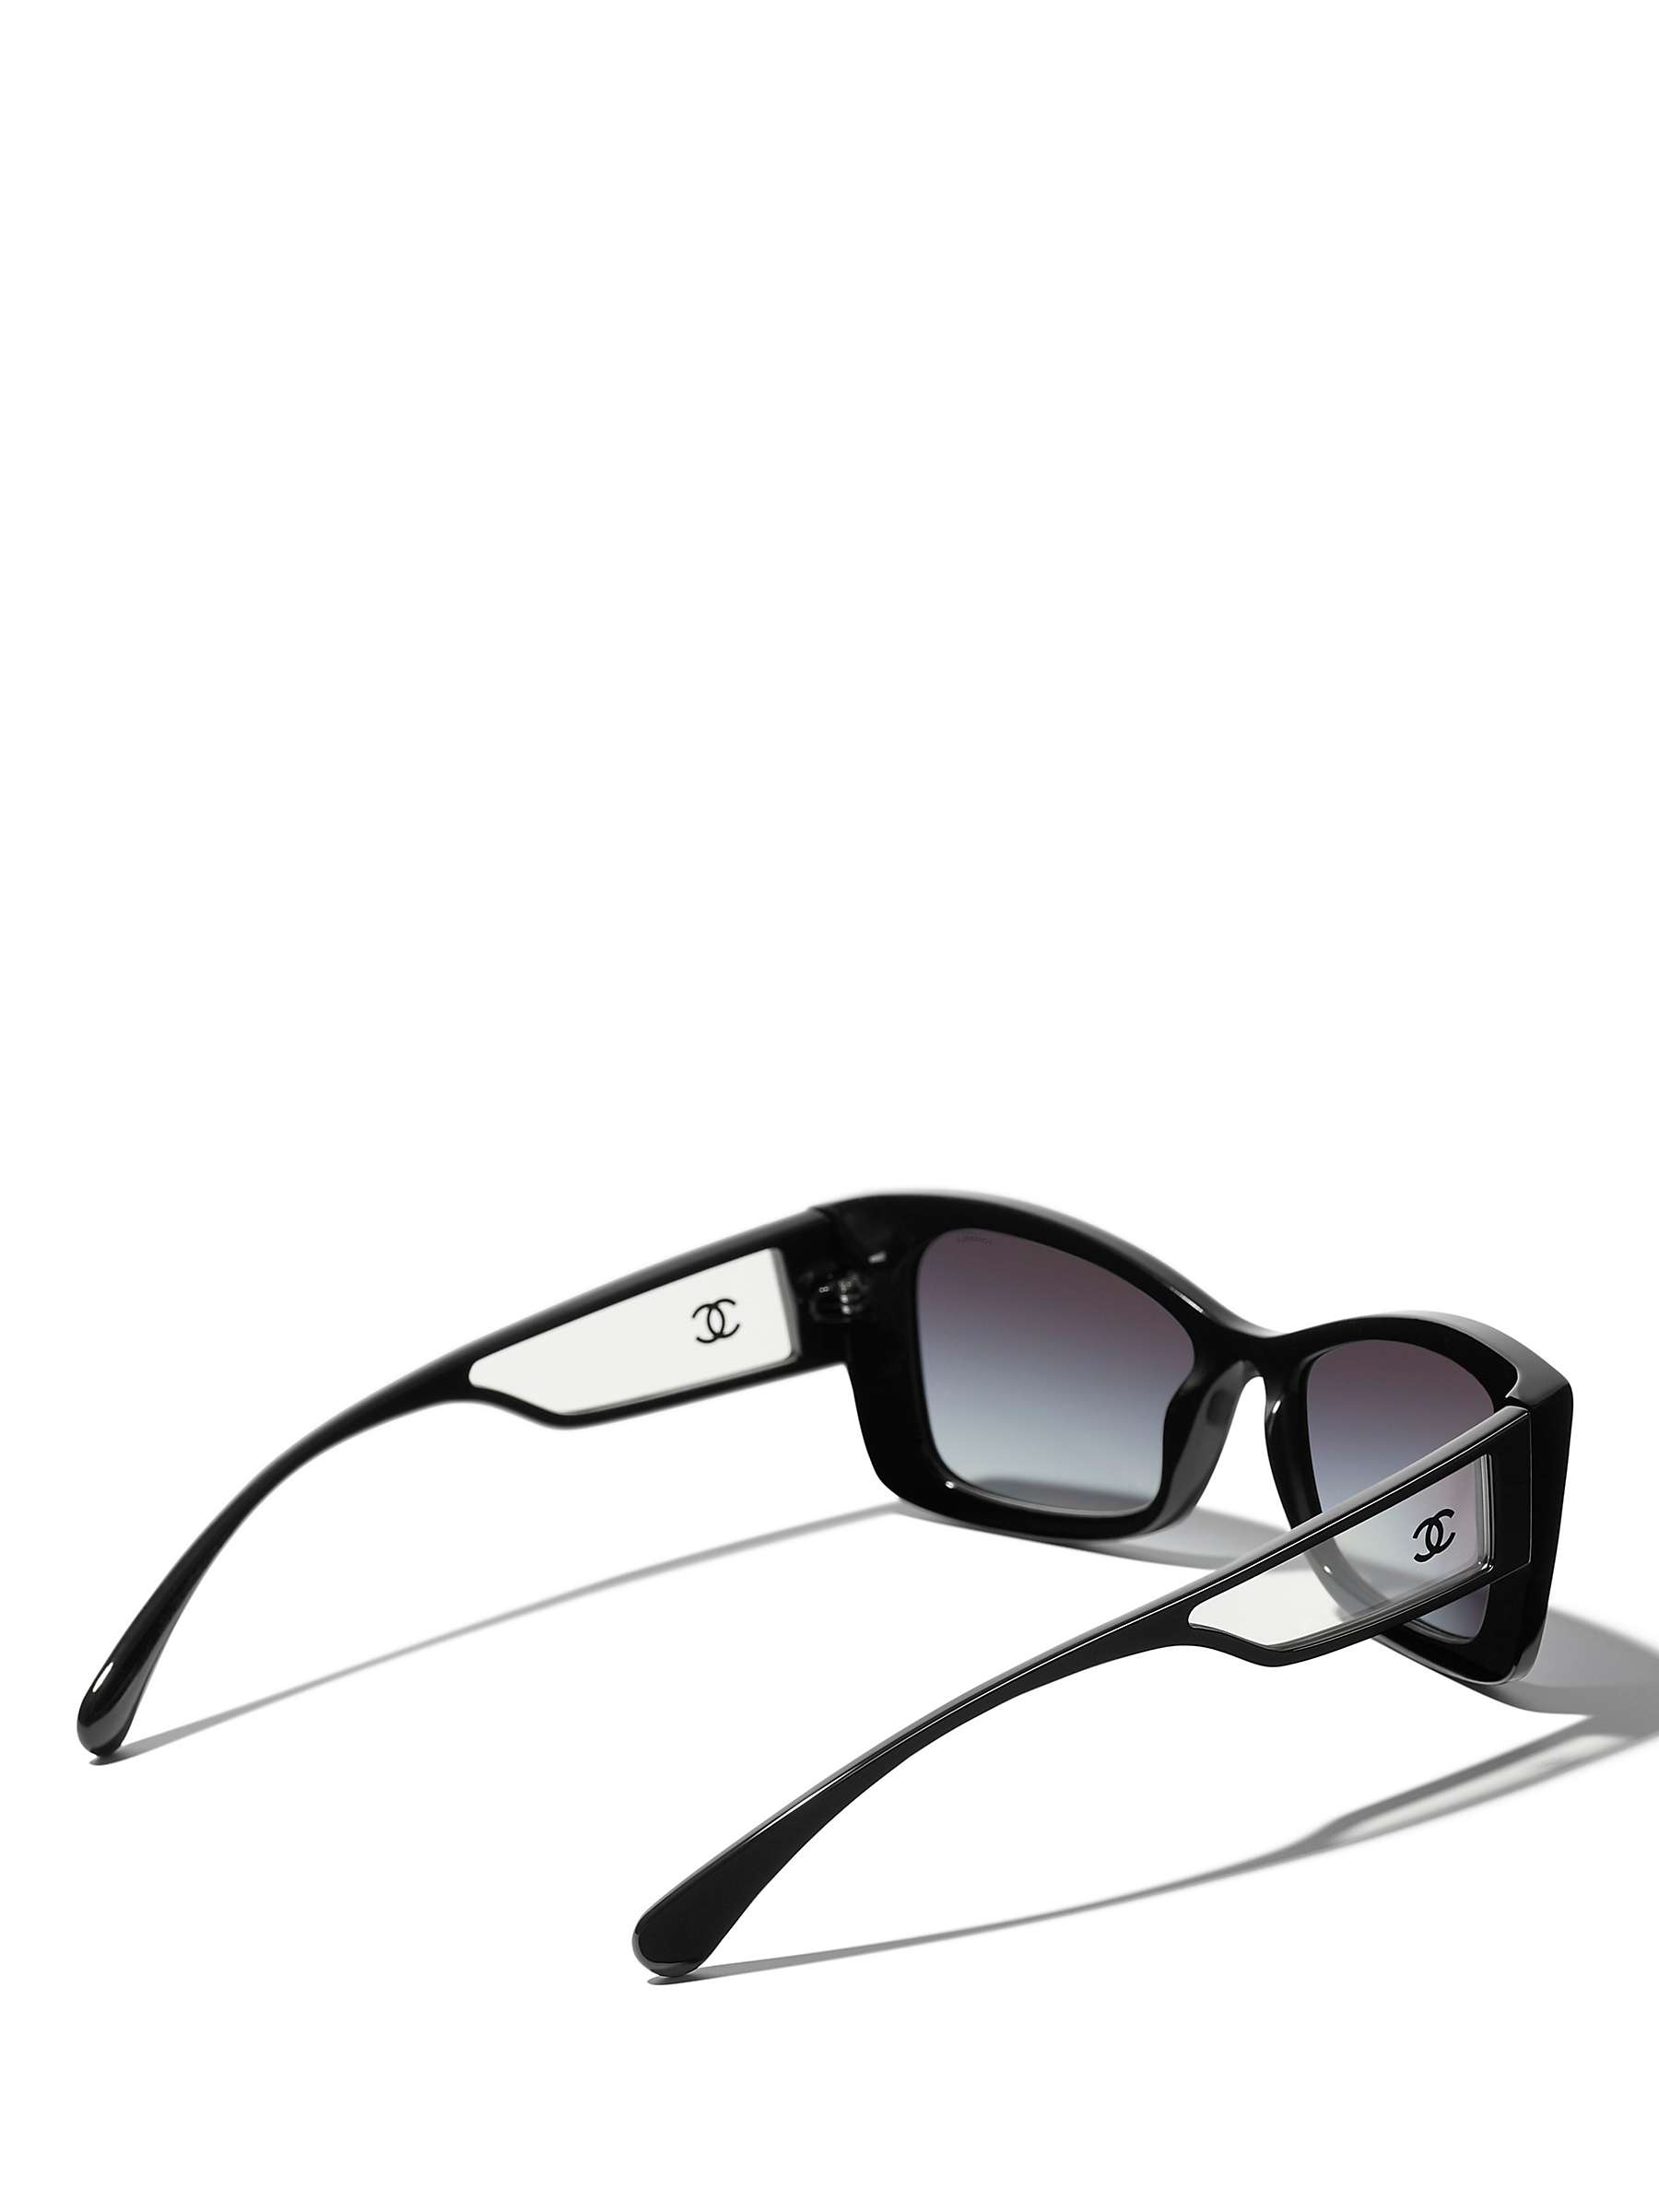 Buy CHANEL Irregular Sunglasses CH5430 Black/Grey Gradient Online at johnlewis.com